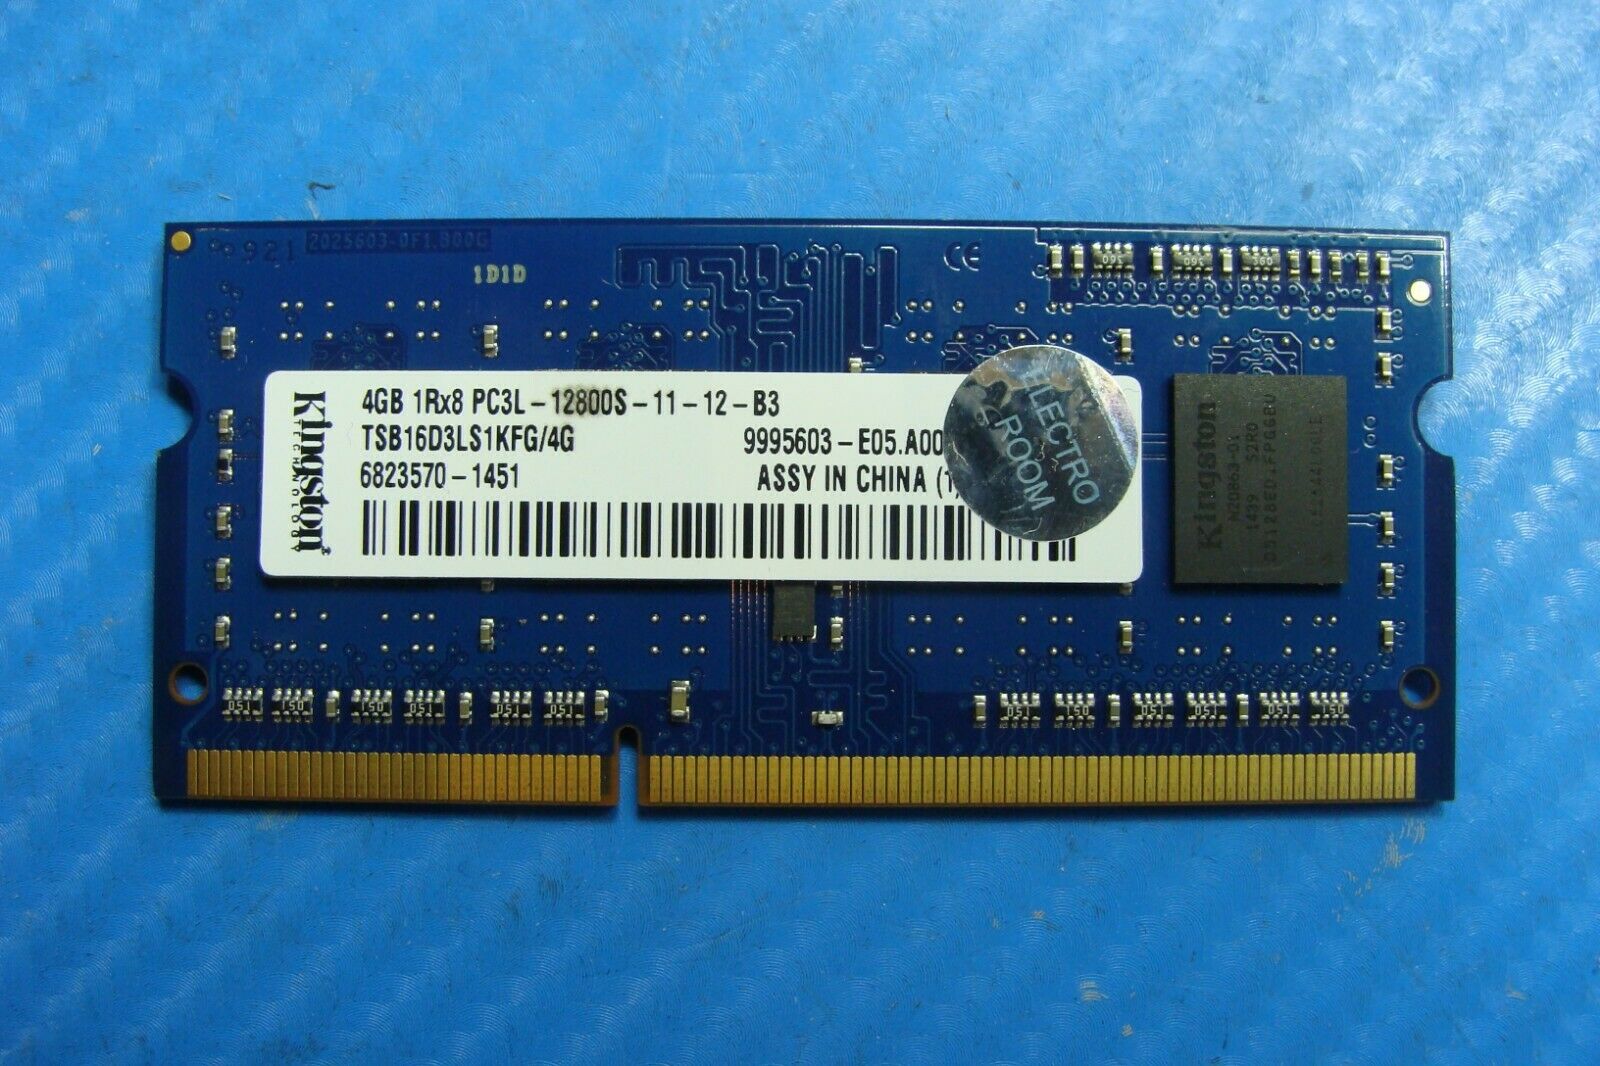 Toshiba P55W-B5220 Kingston 4Gb Memory RAM SoDimm pc3l-12800s tsb16d3ls1kfg/4g 